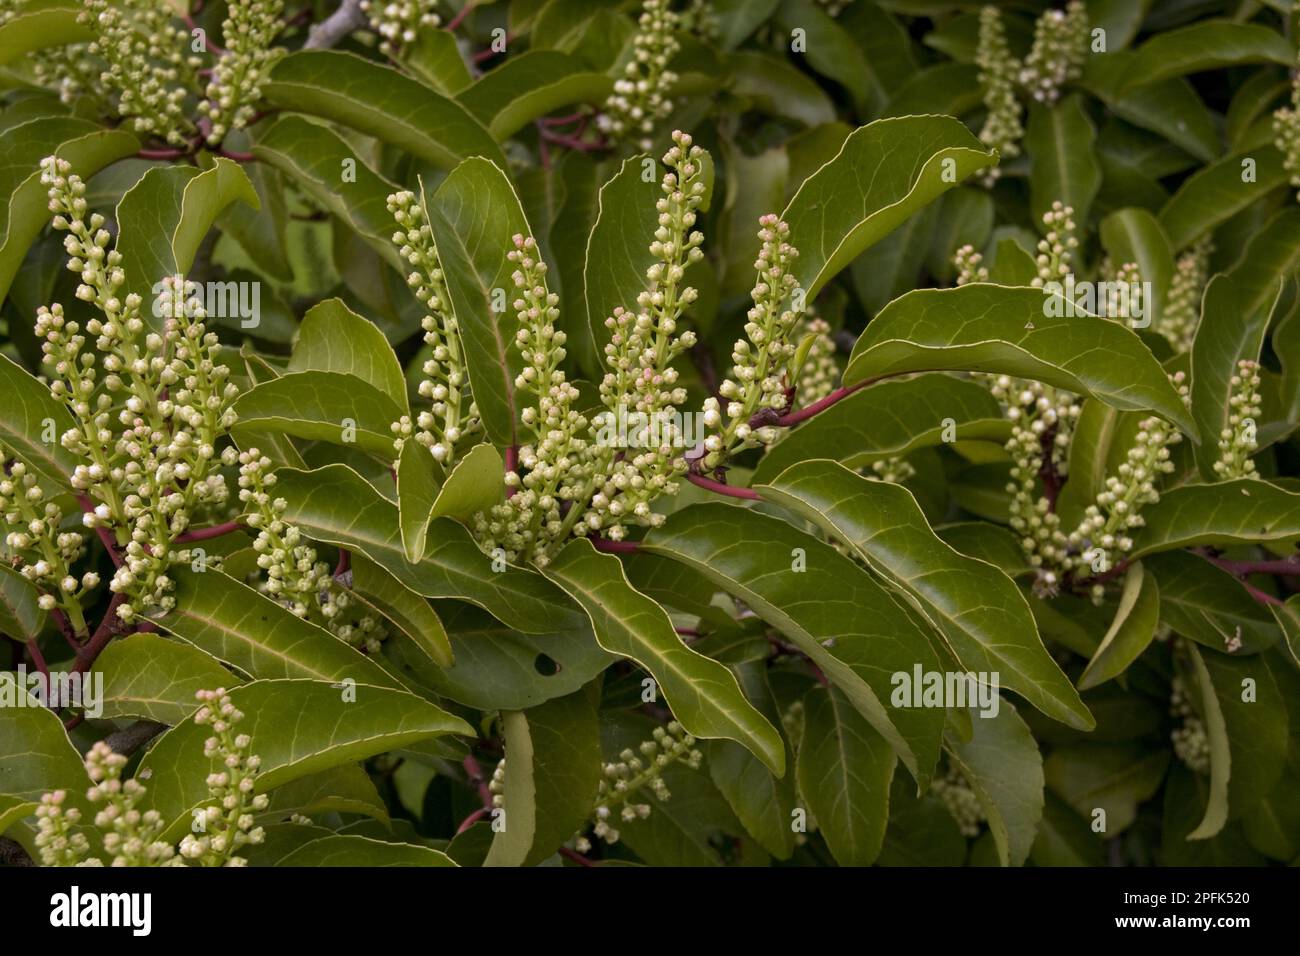 Portuguese Laurel, Rose family, Portugal Laurel flowering shoot, Prunus lusitanica Stock Photo